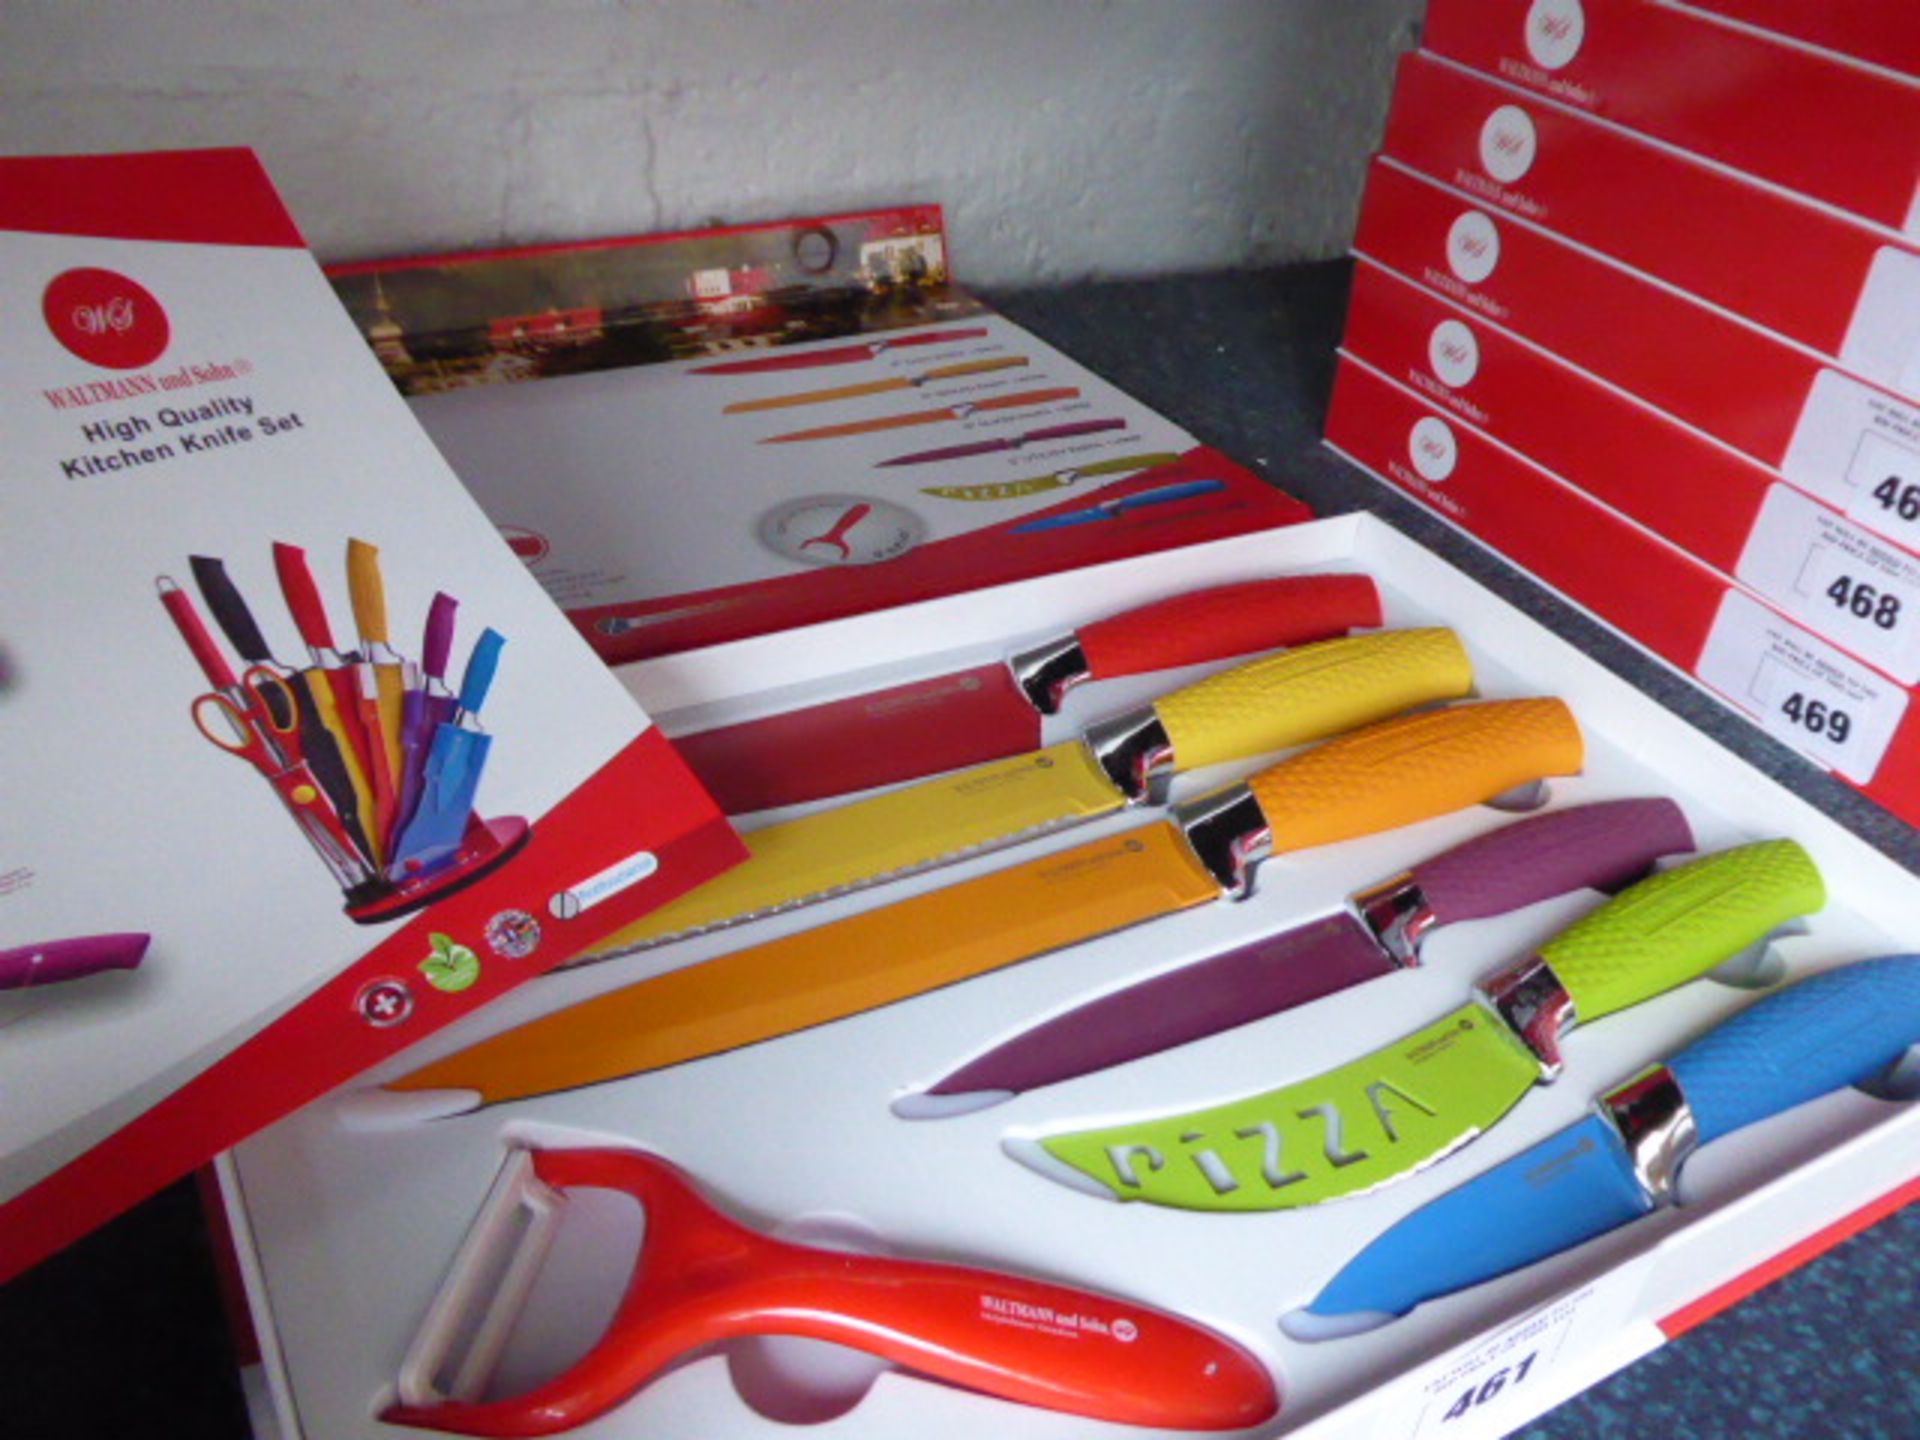 Waltmann 7 piece colourful knife set